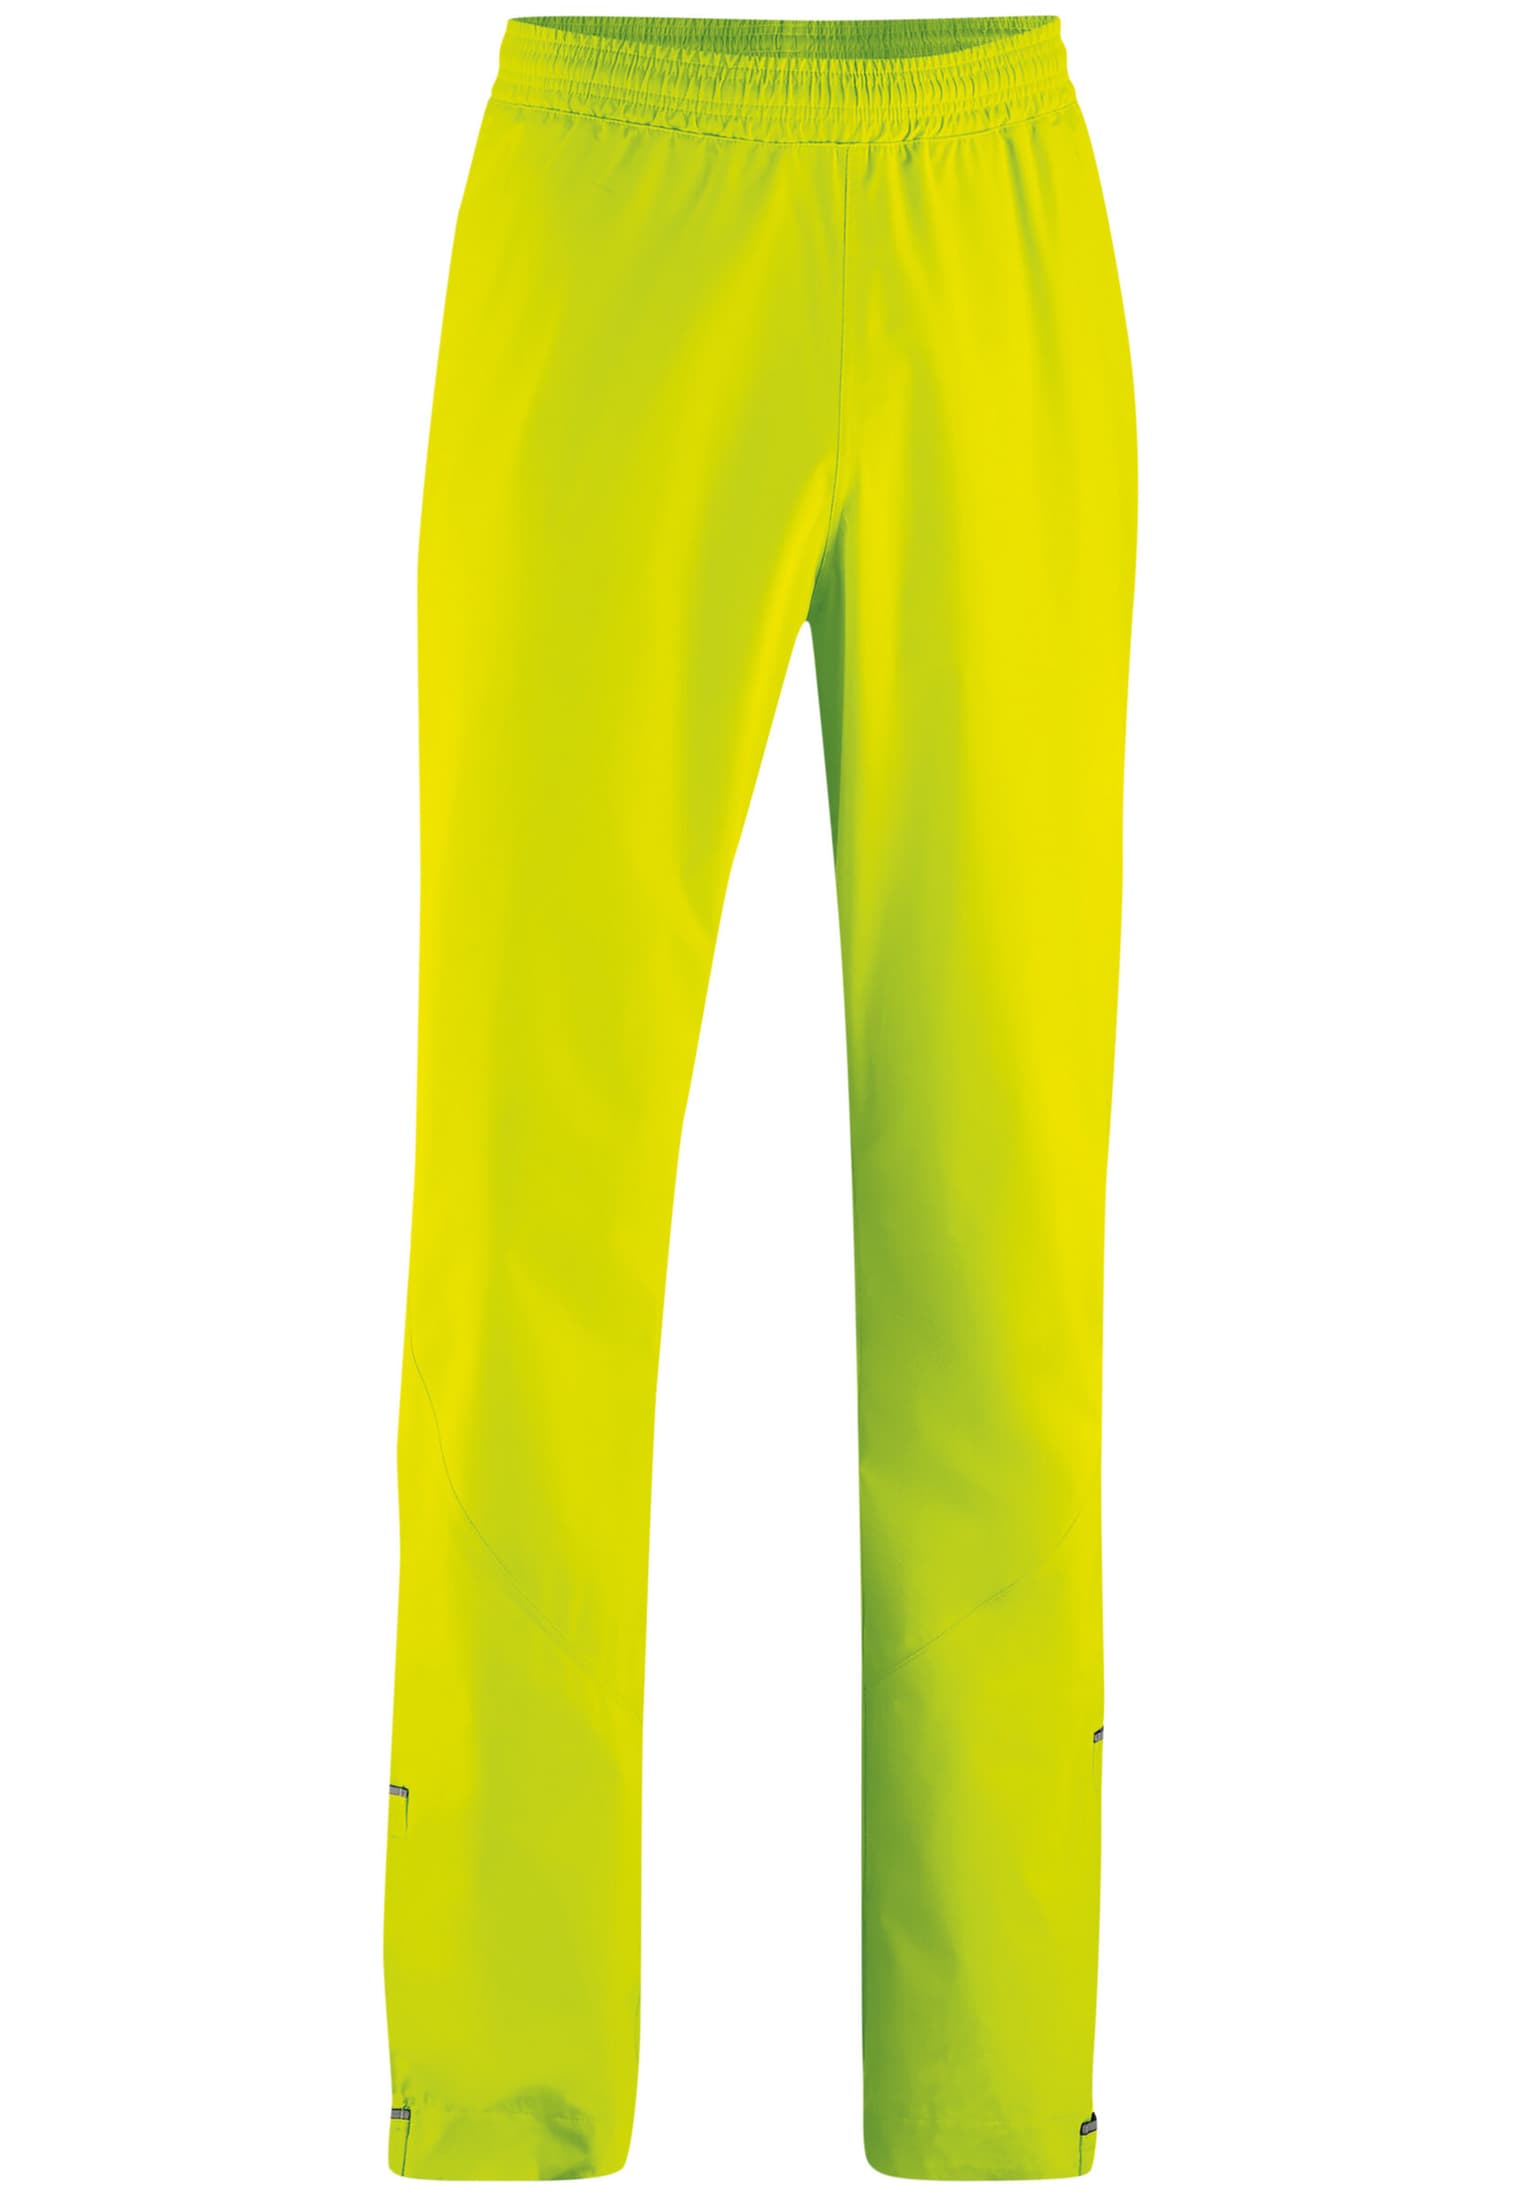 Gonso Gonso Nandro Bikehose jaune-neon 1